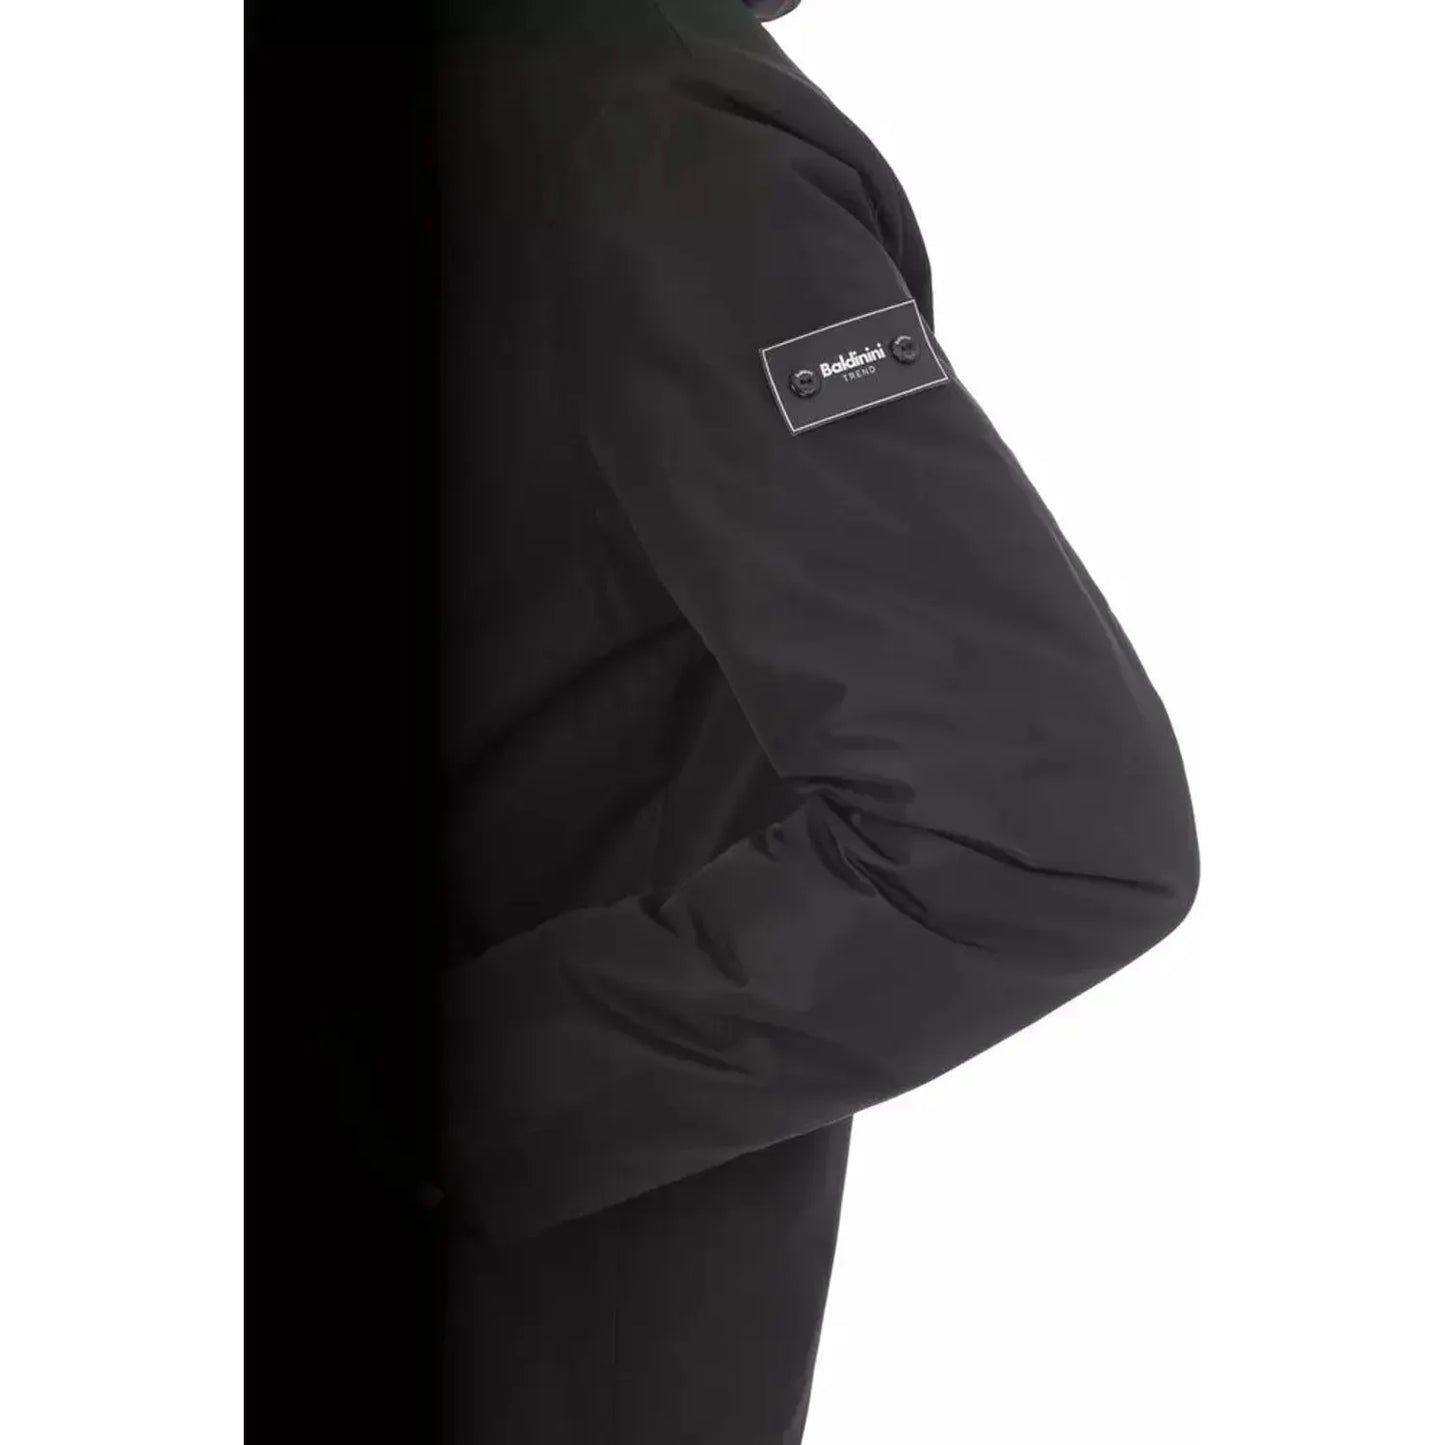 Baldinini Trend Sleek Black Long Jacket with Monogram Detail black-polyester-jacket-15